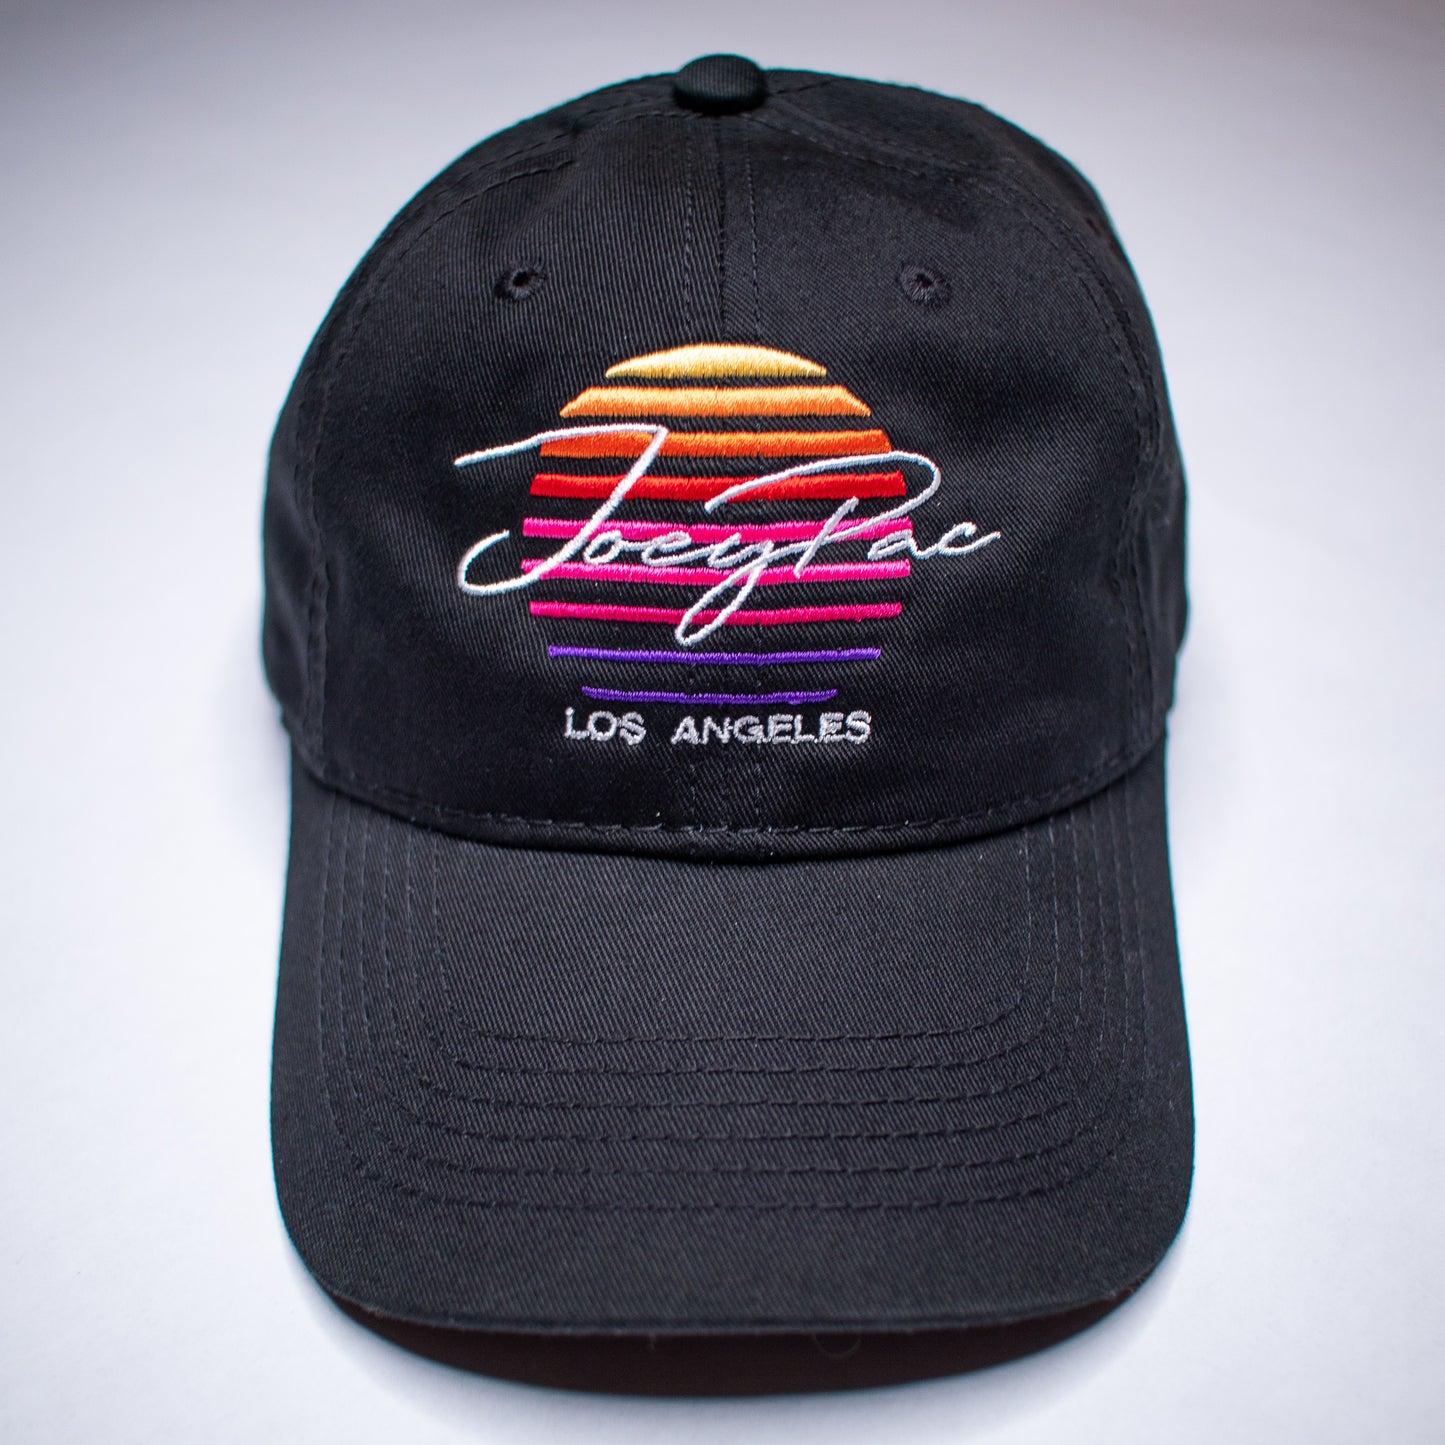 JoeyPac Los Angeles Dad Hat - Black